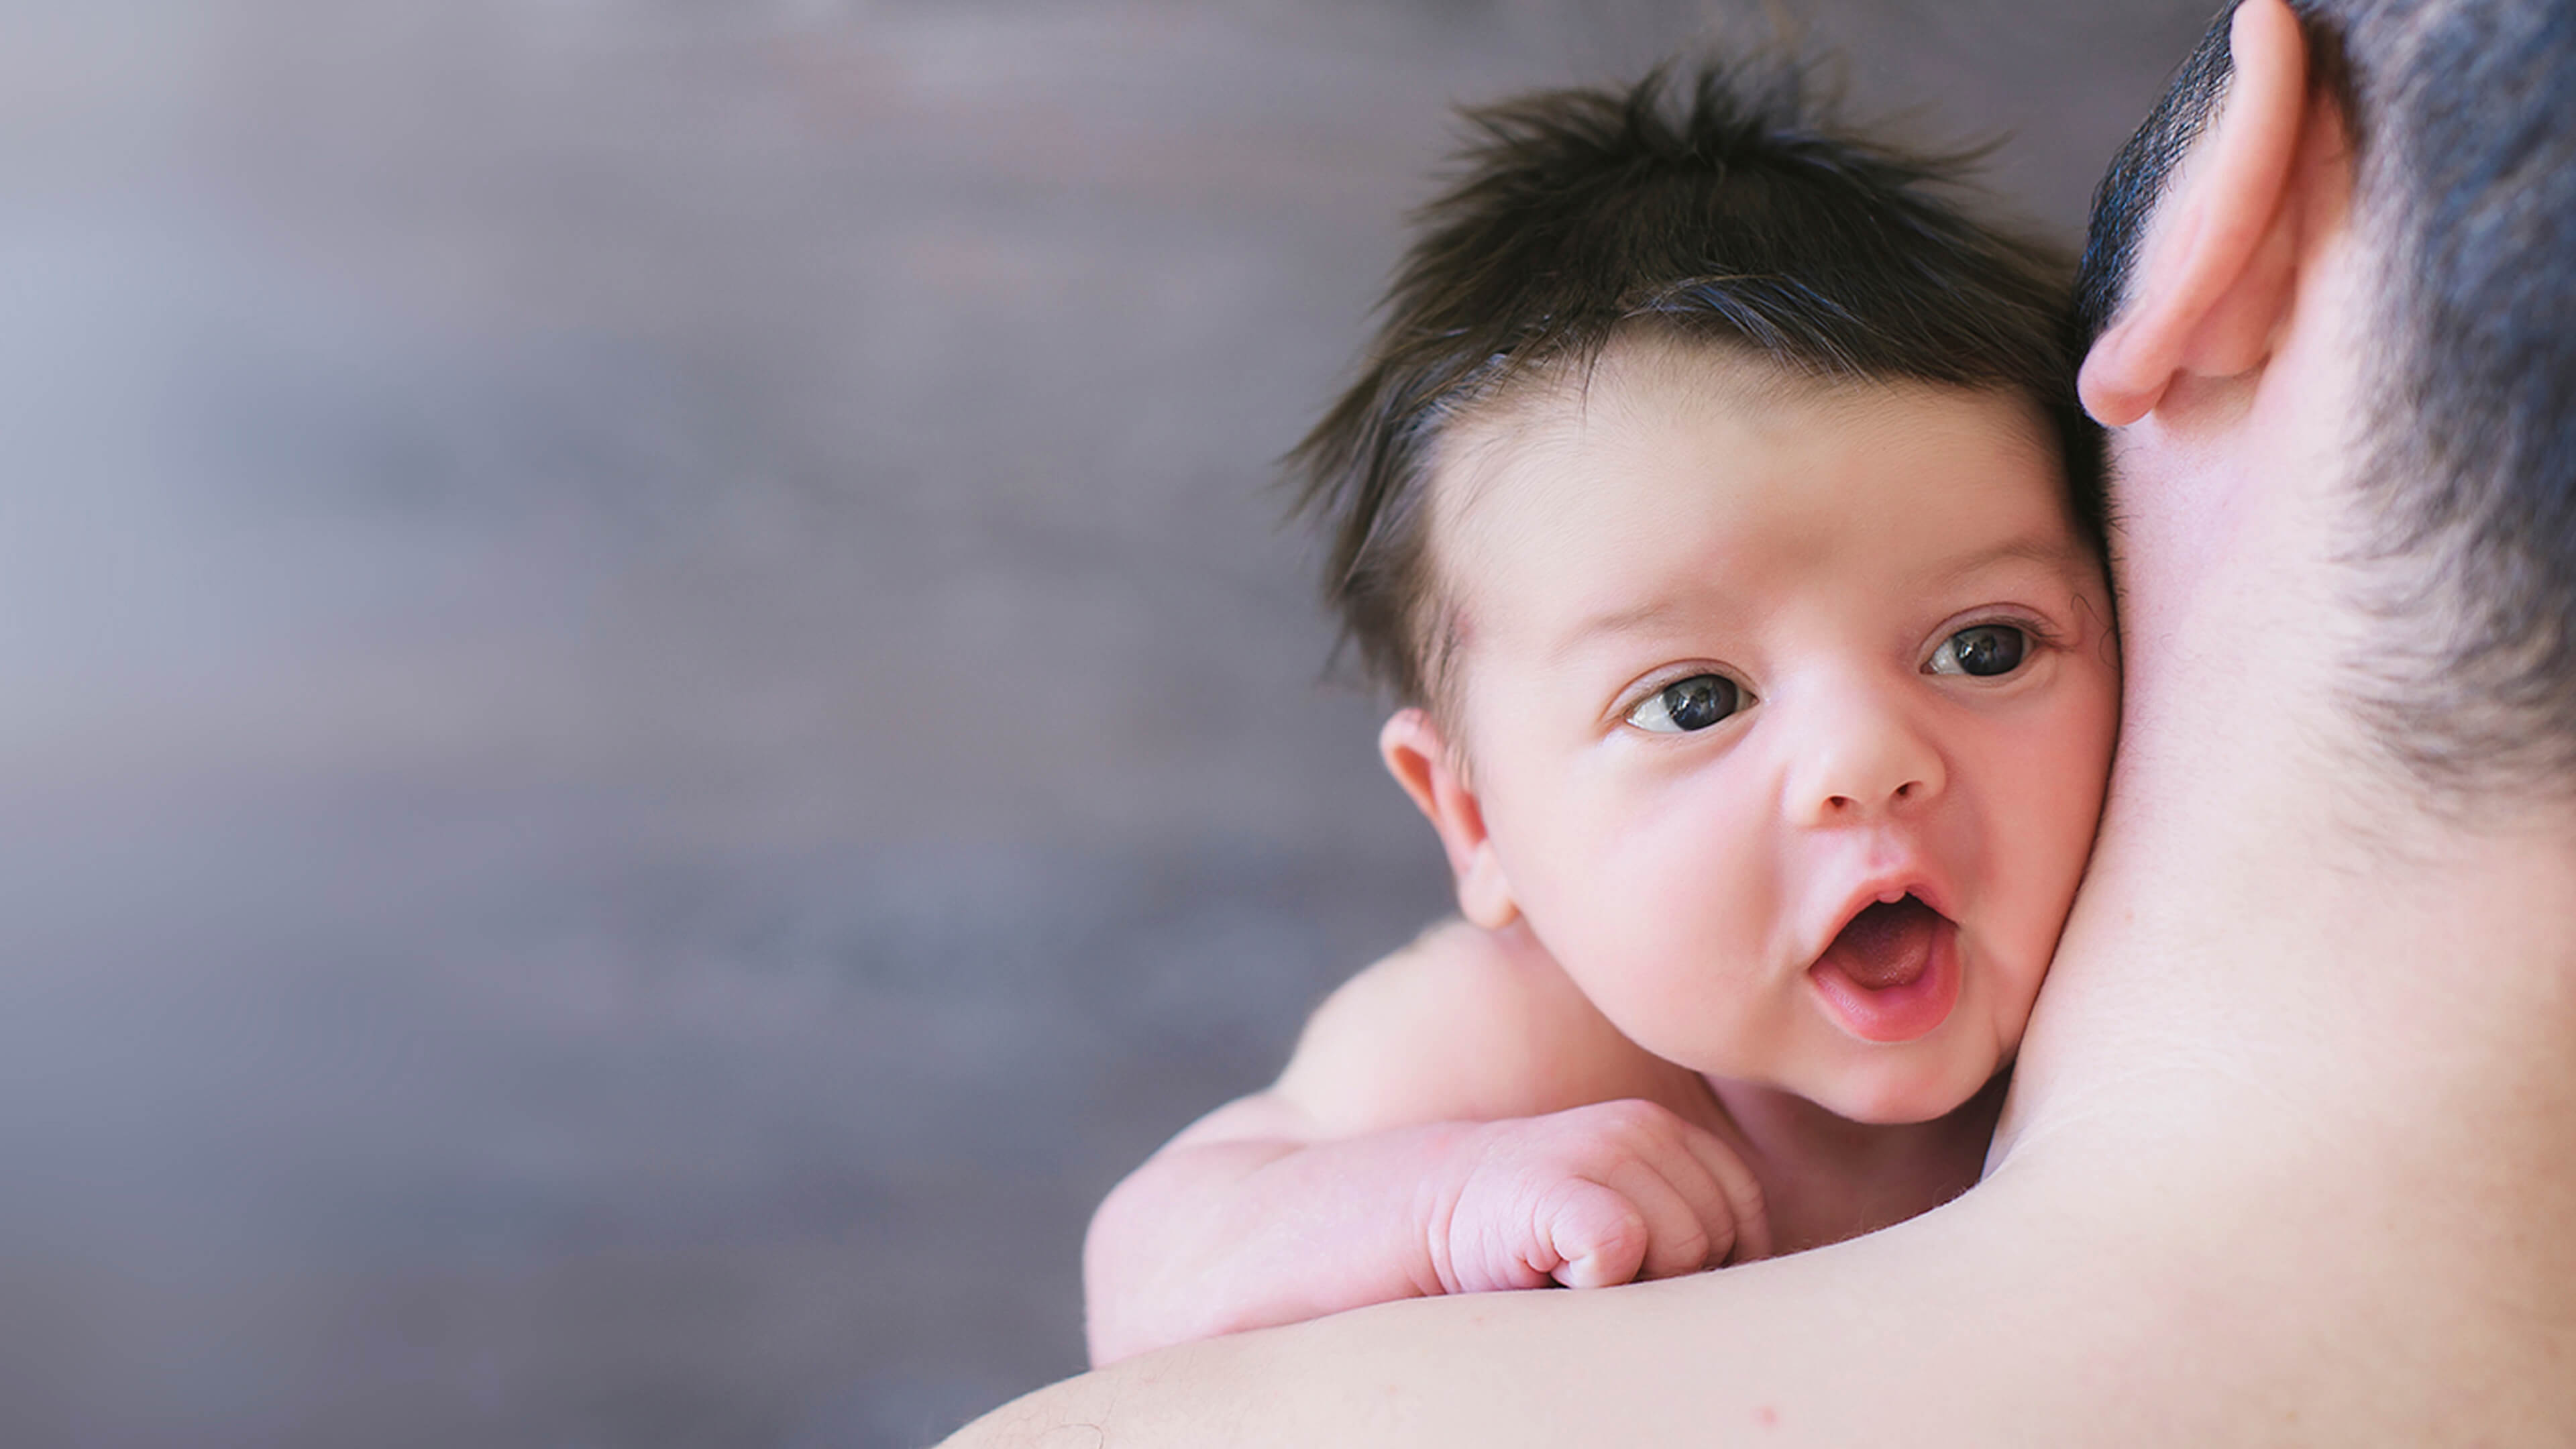 Baby acid reflux breastfeeding foods to avoid